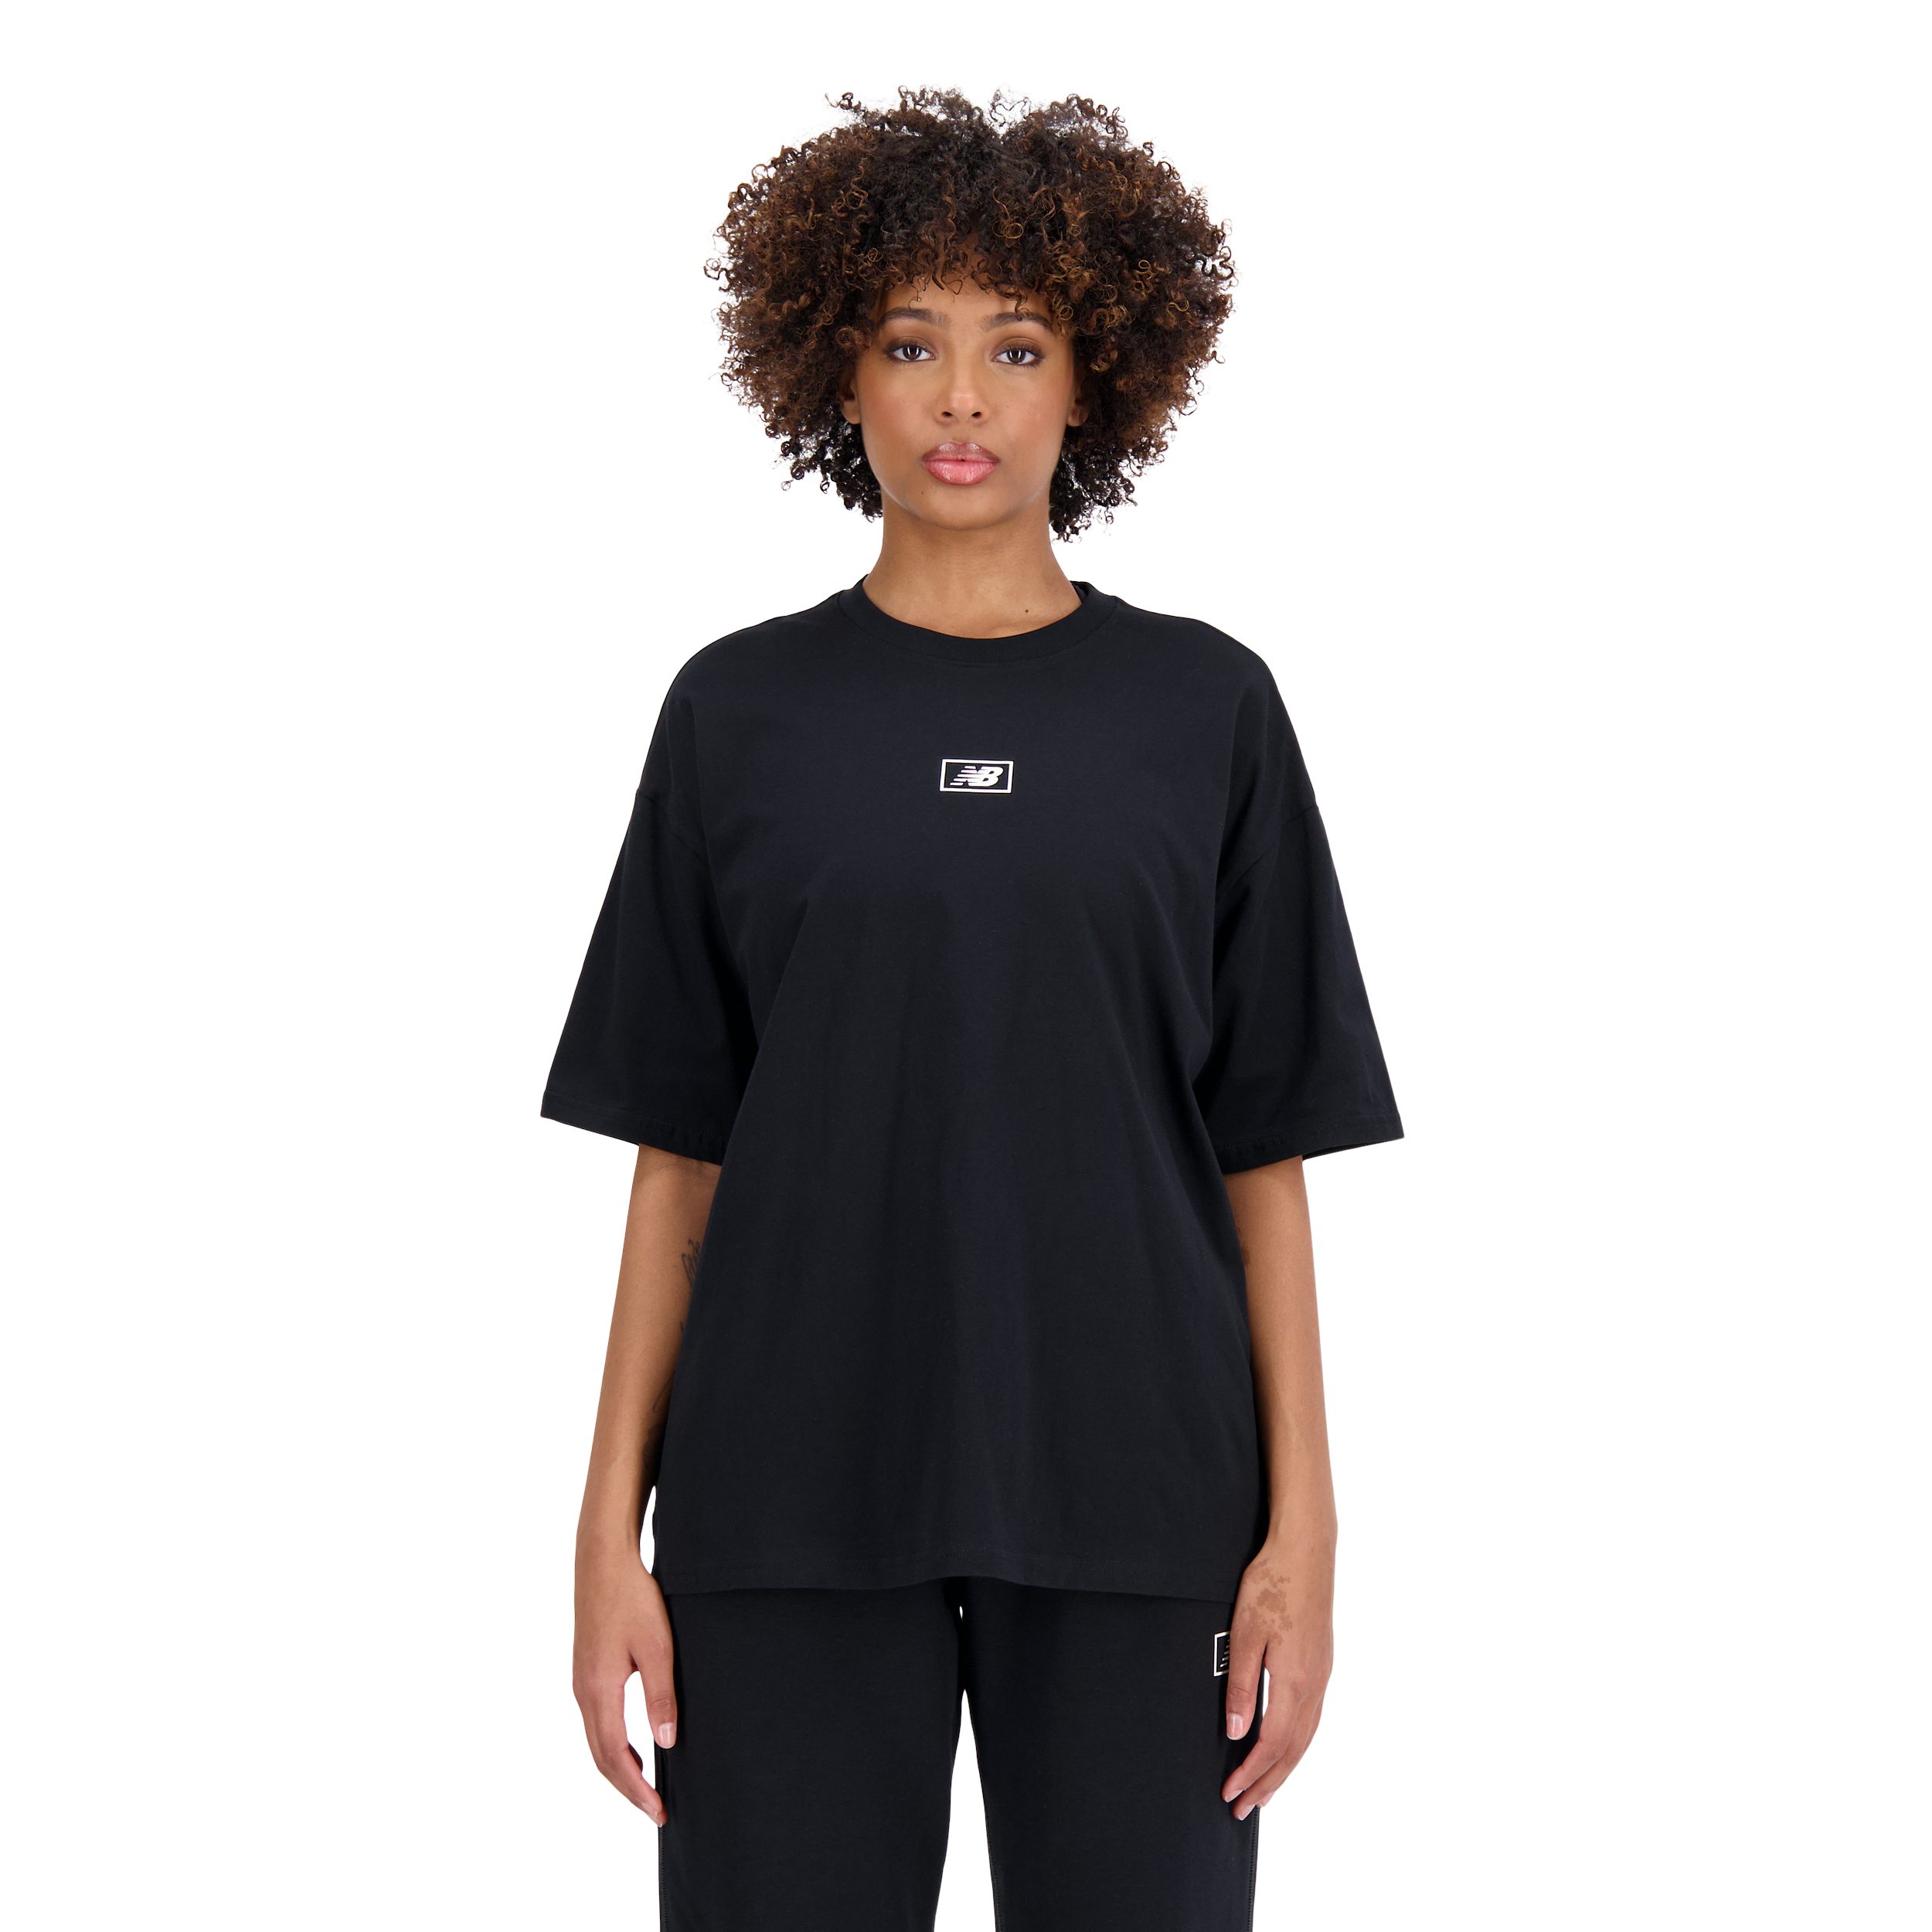 New Balance T-Shirt black (001)